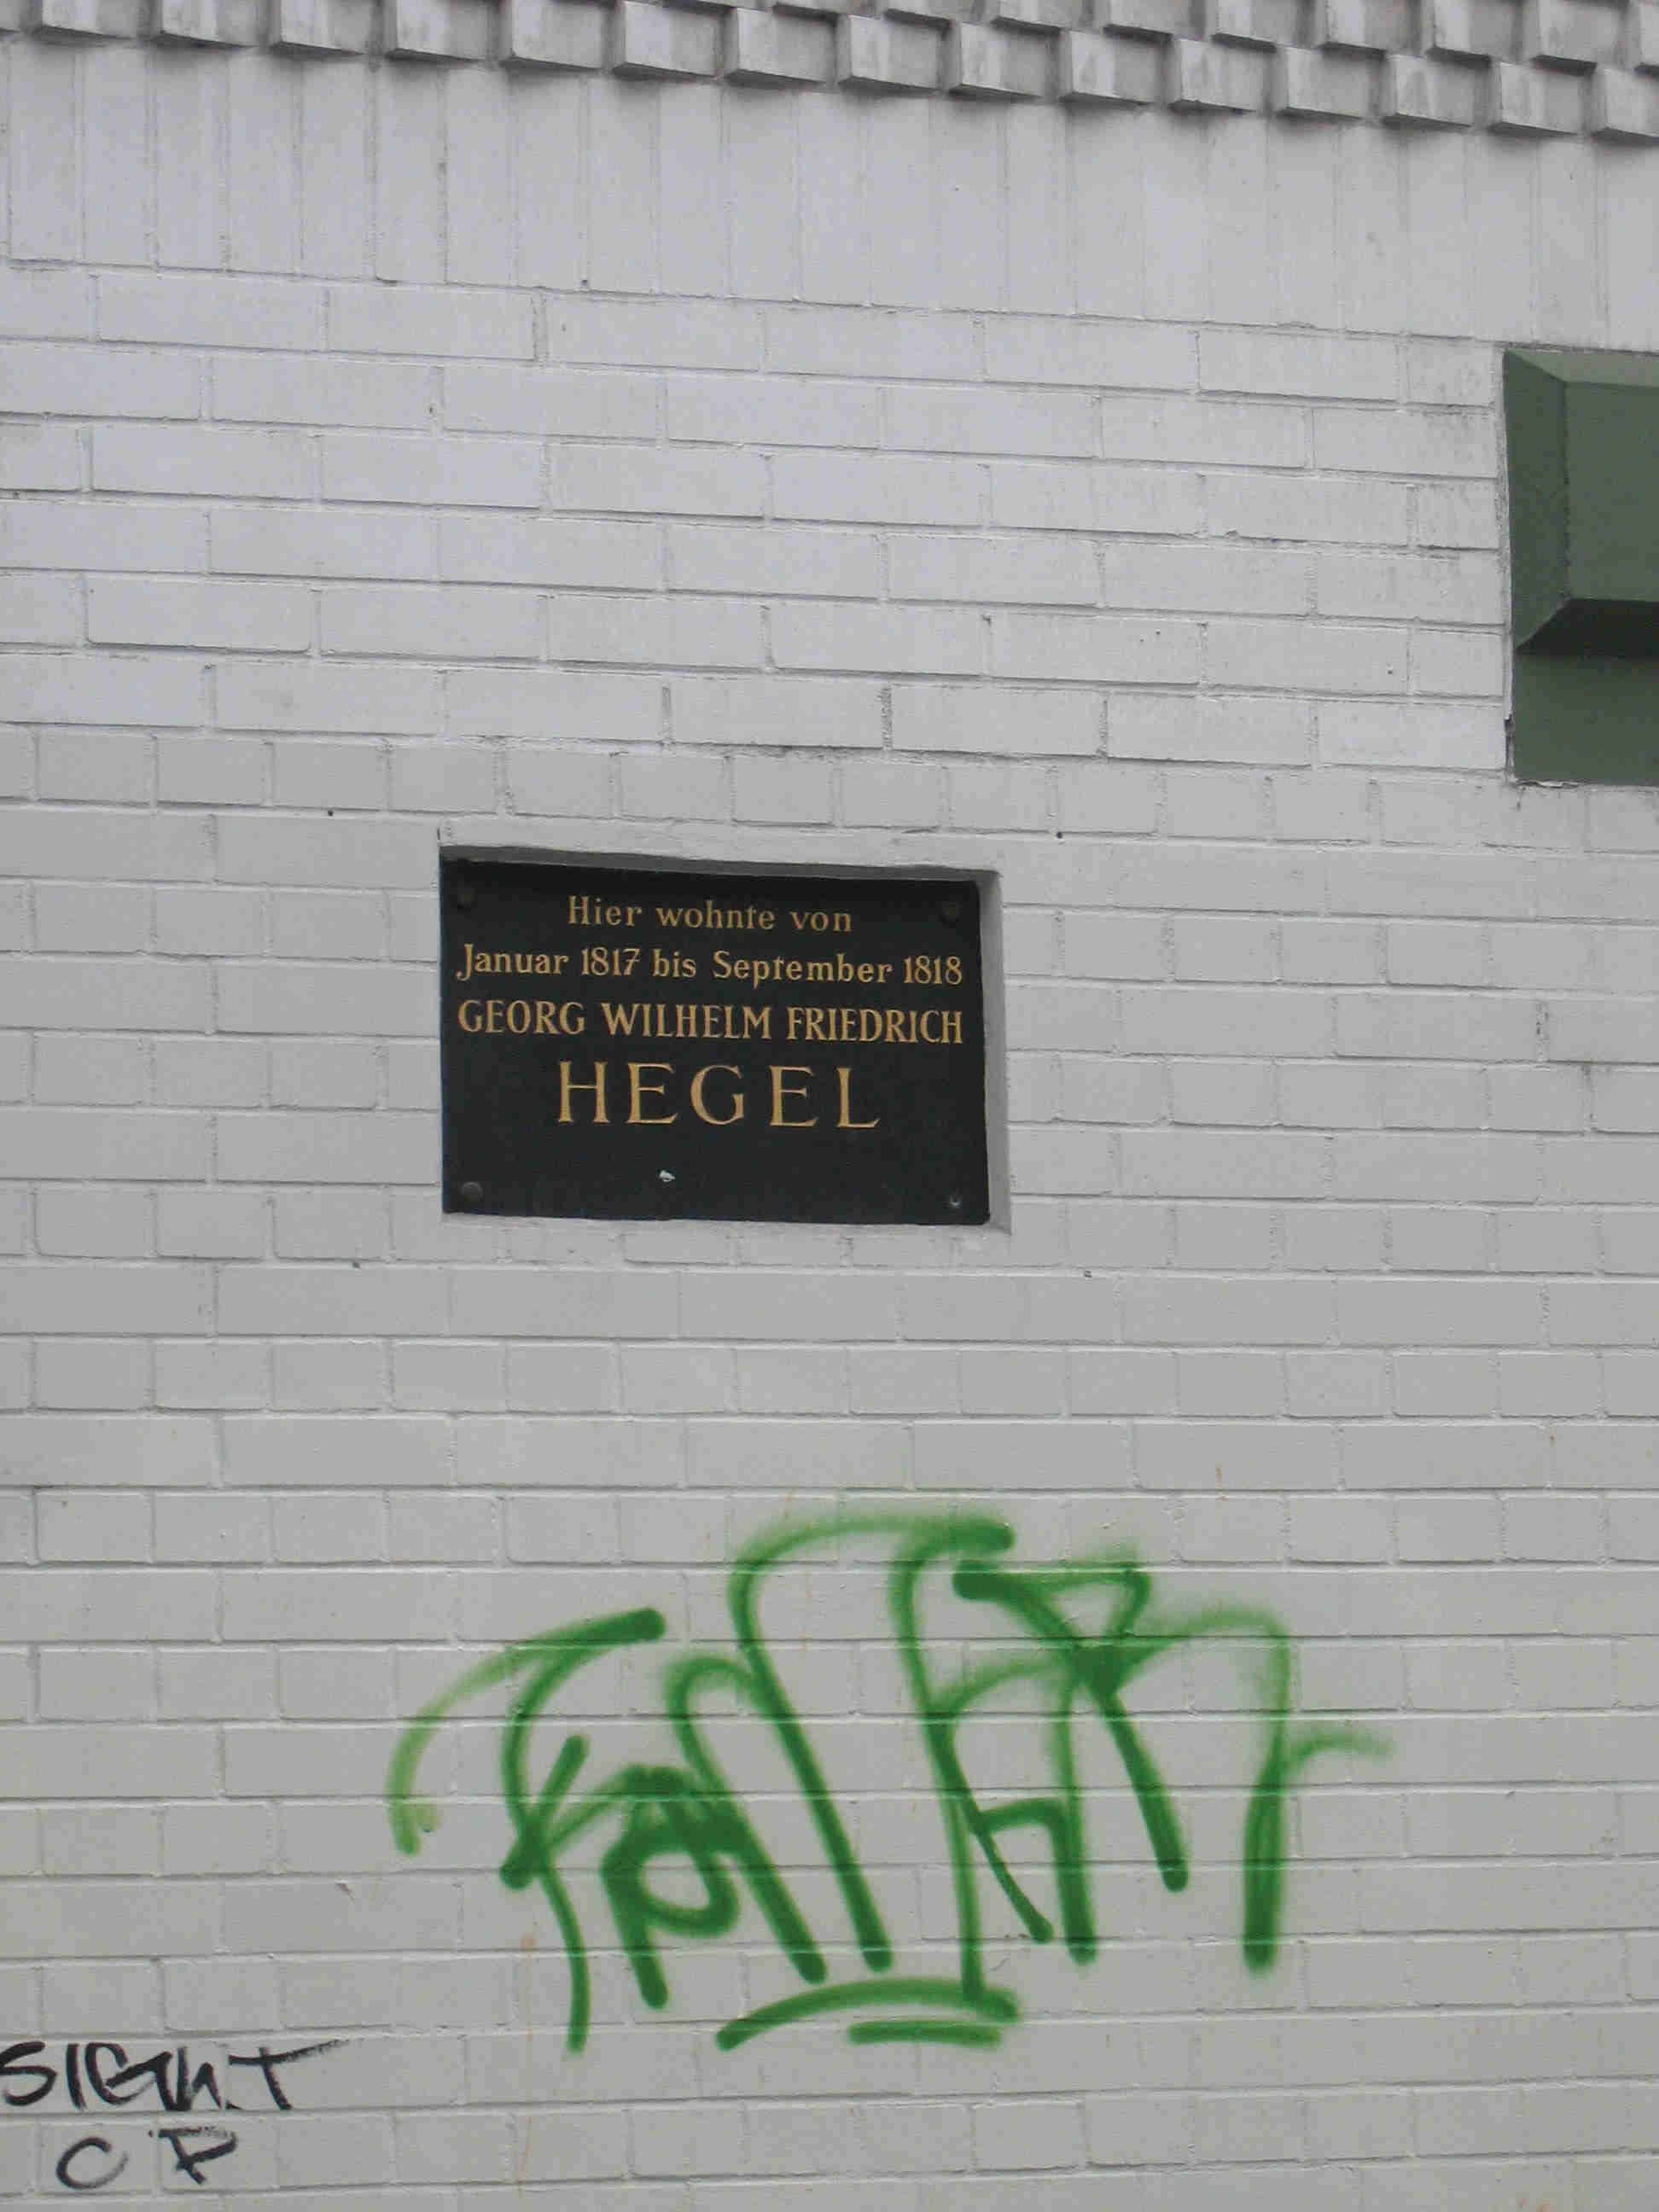 Hegel in der Tiefgarage